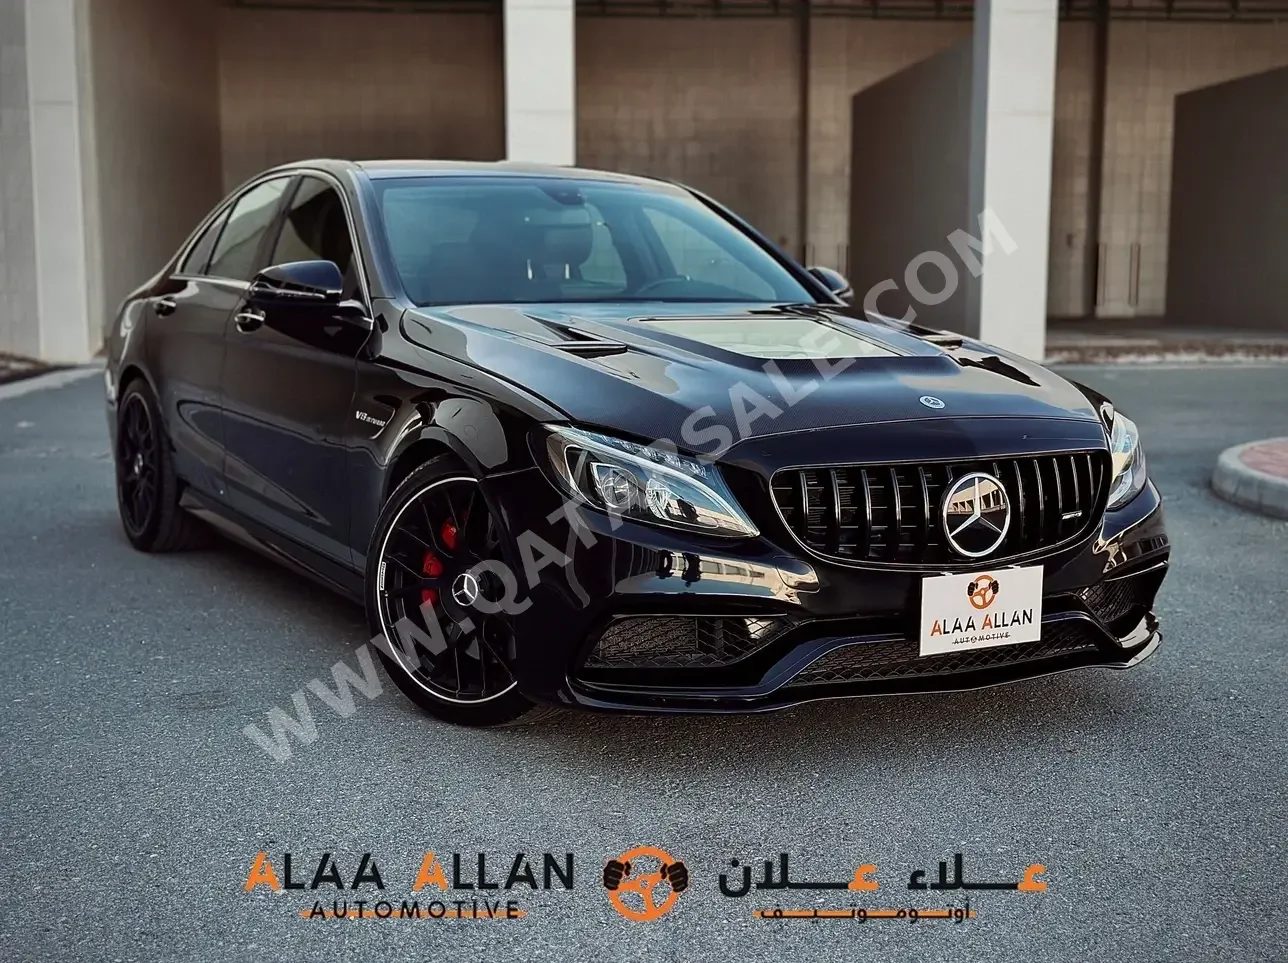 Mercedes-Benz  C-Class  63 AMG S  2017  Automatic  65,000 Km  8 Cylinder  Rear Wheel Drive (RWD)  Sedan  Black